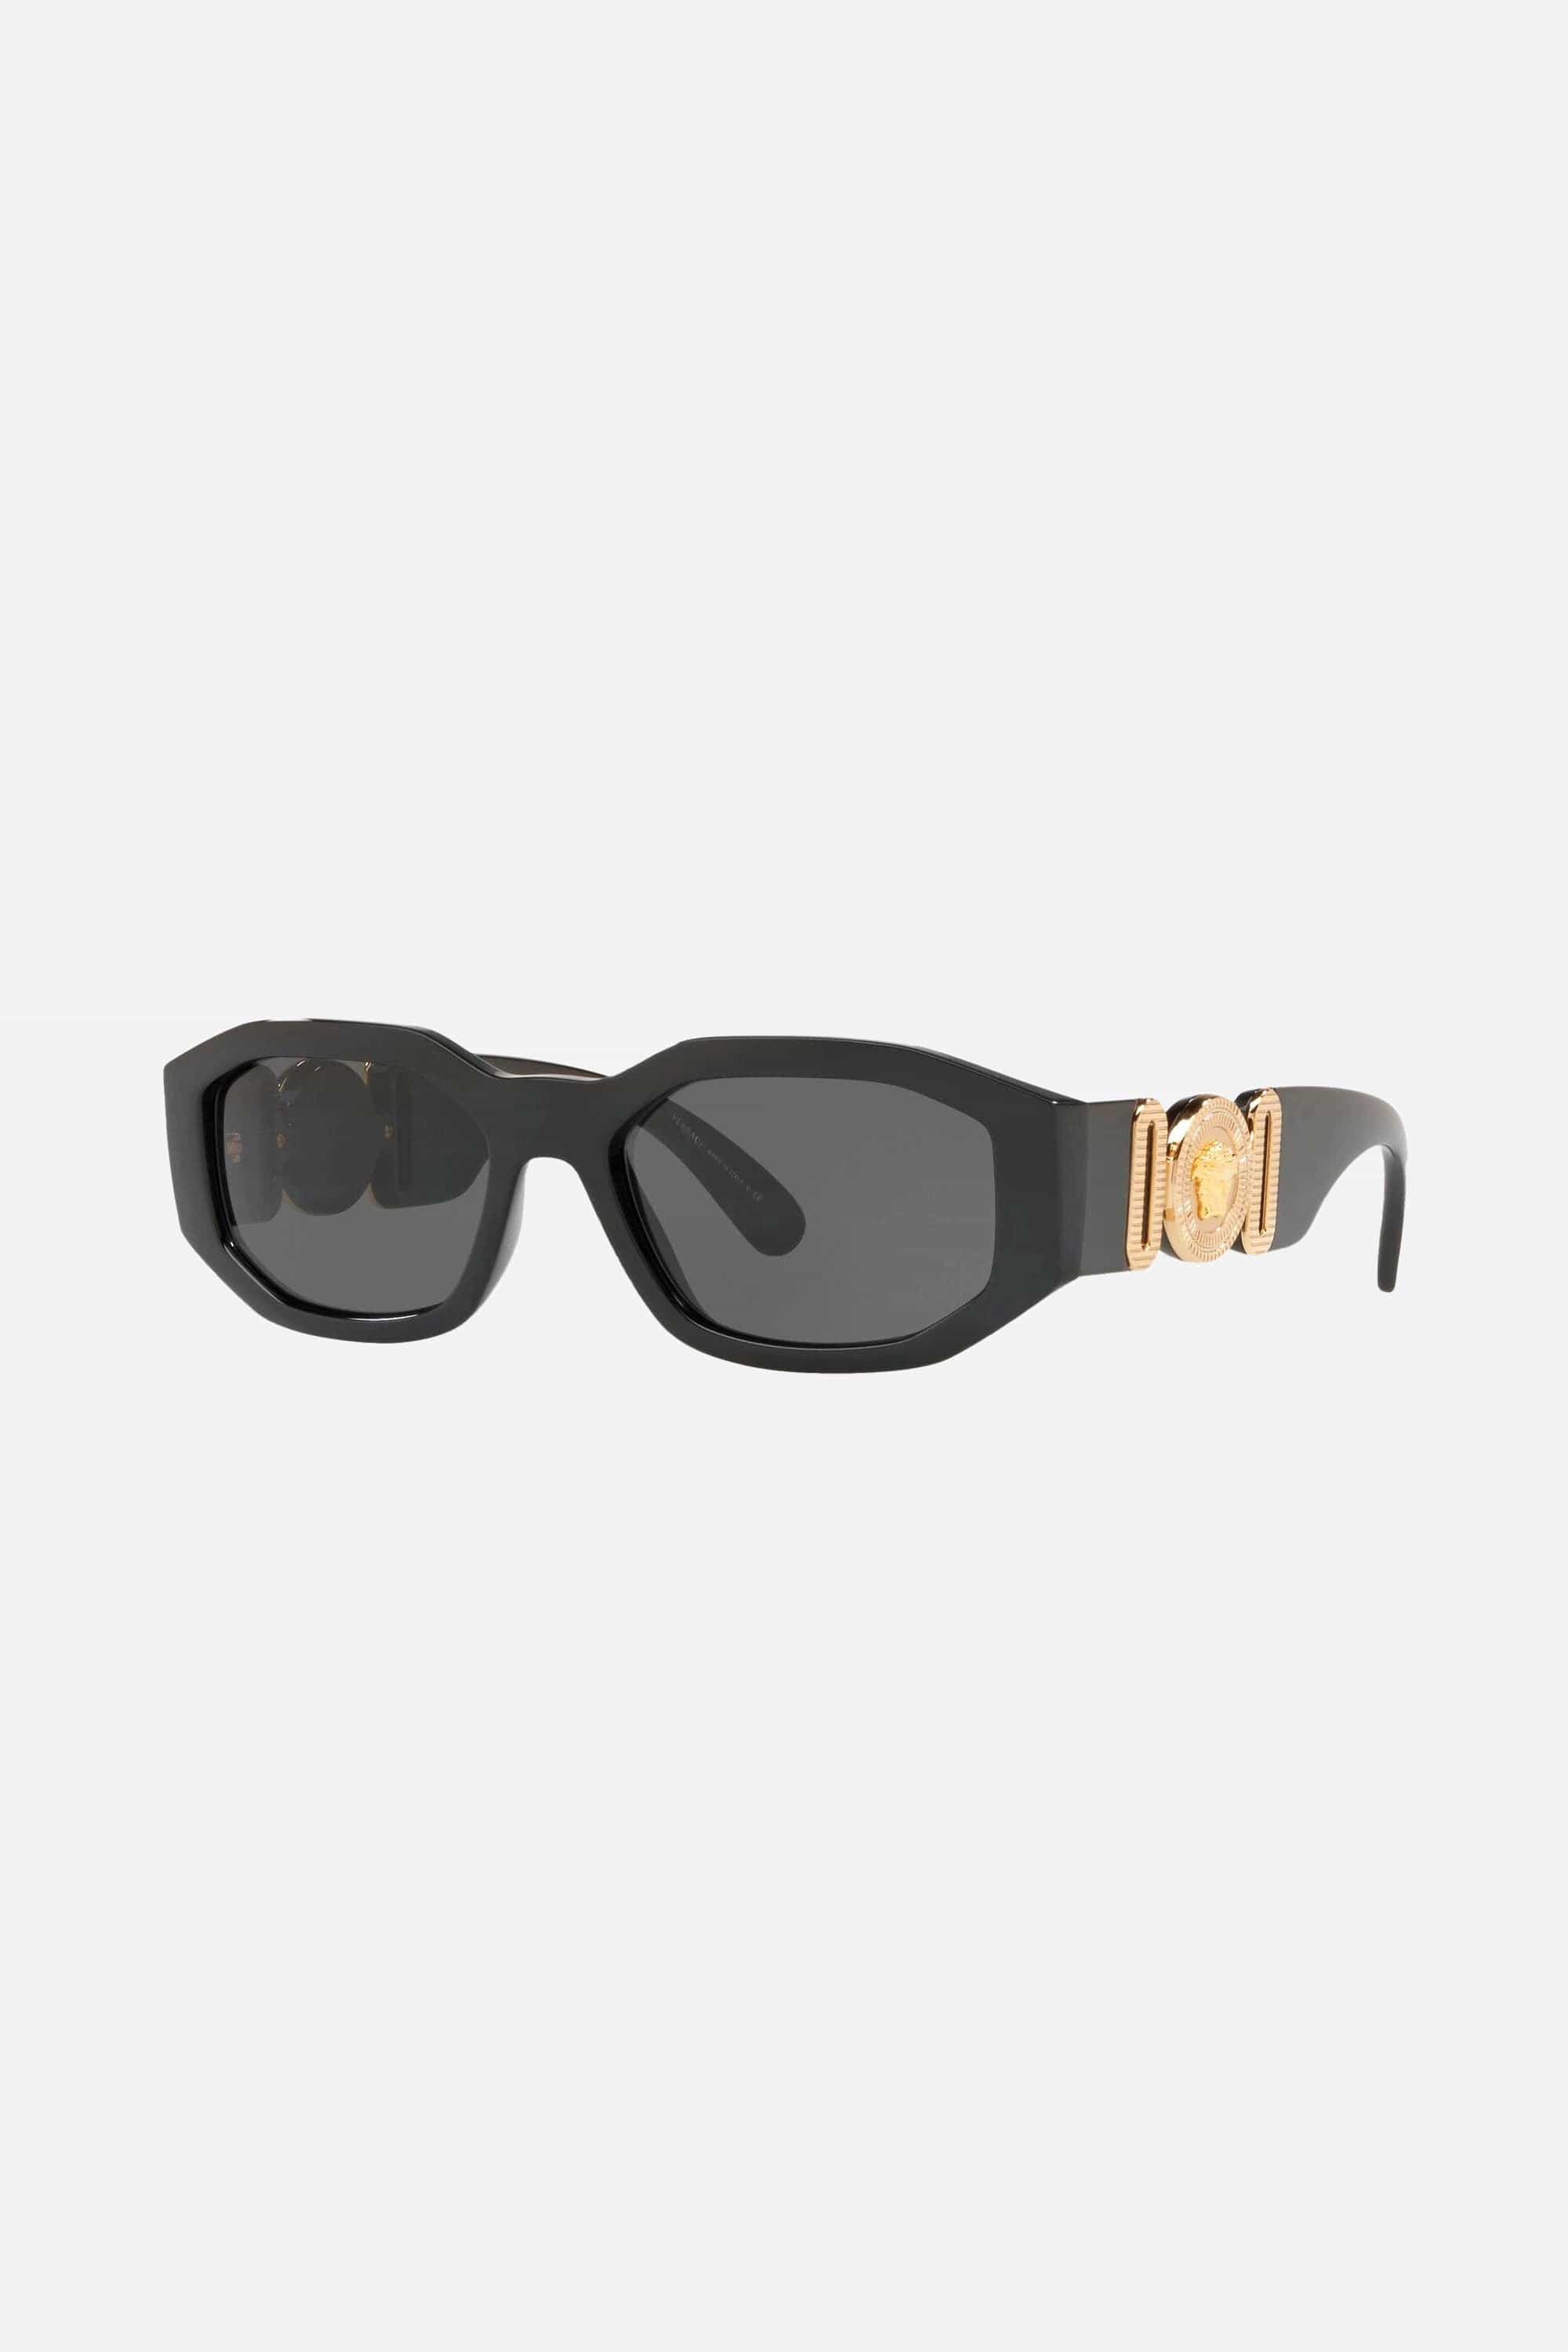 Versace biggie sunglasses in black with iconic jellyfish - Eyewear Club